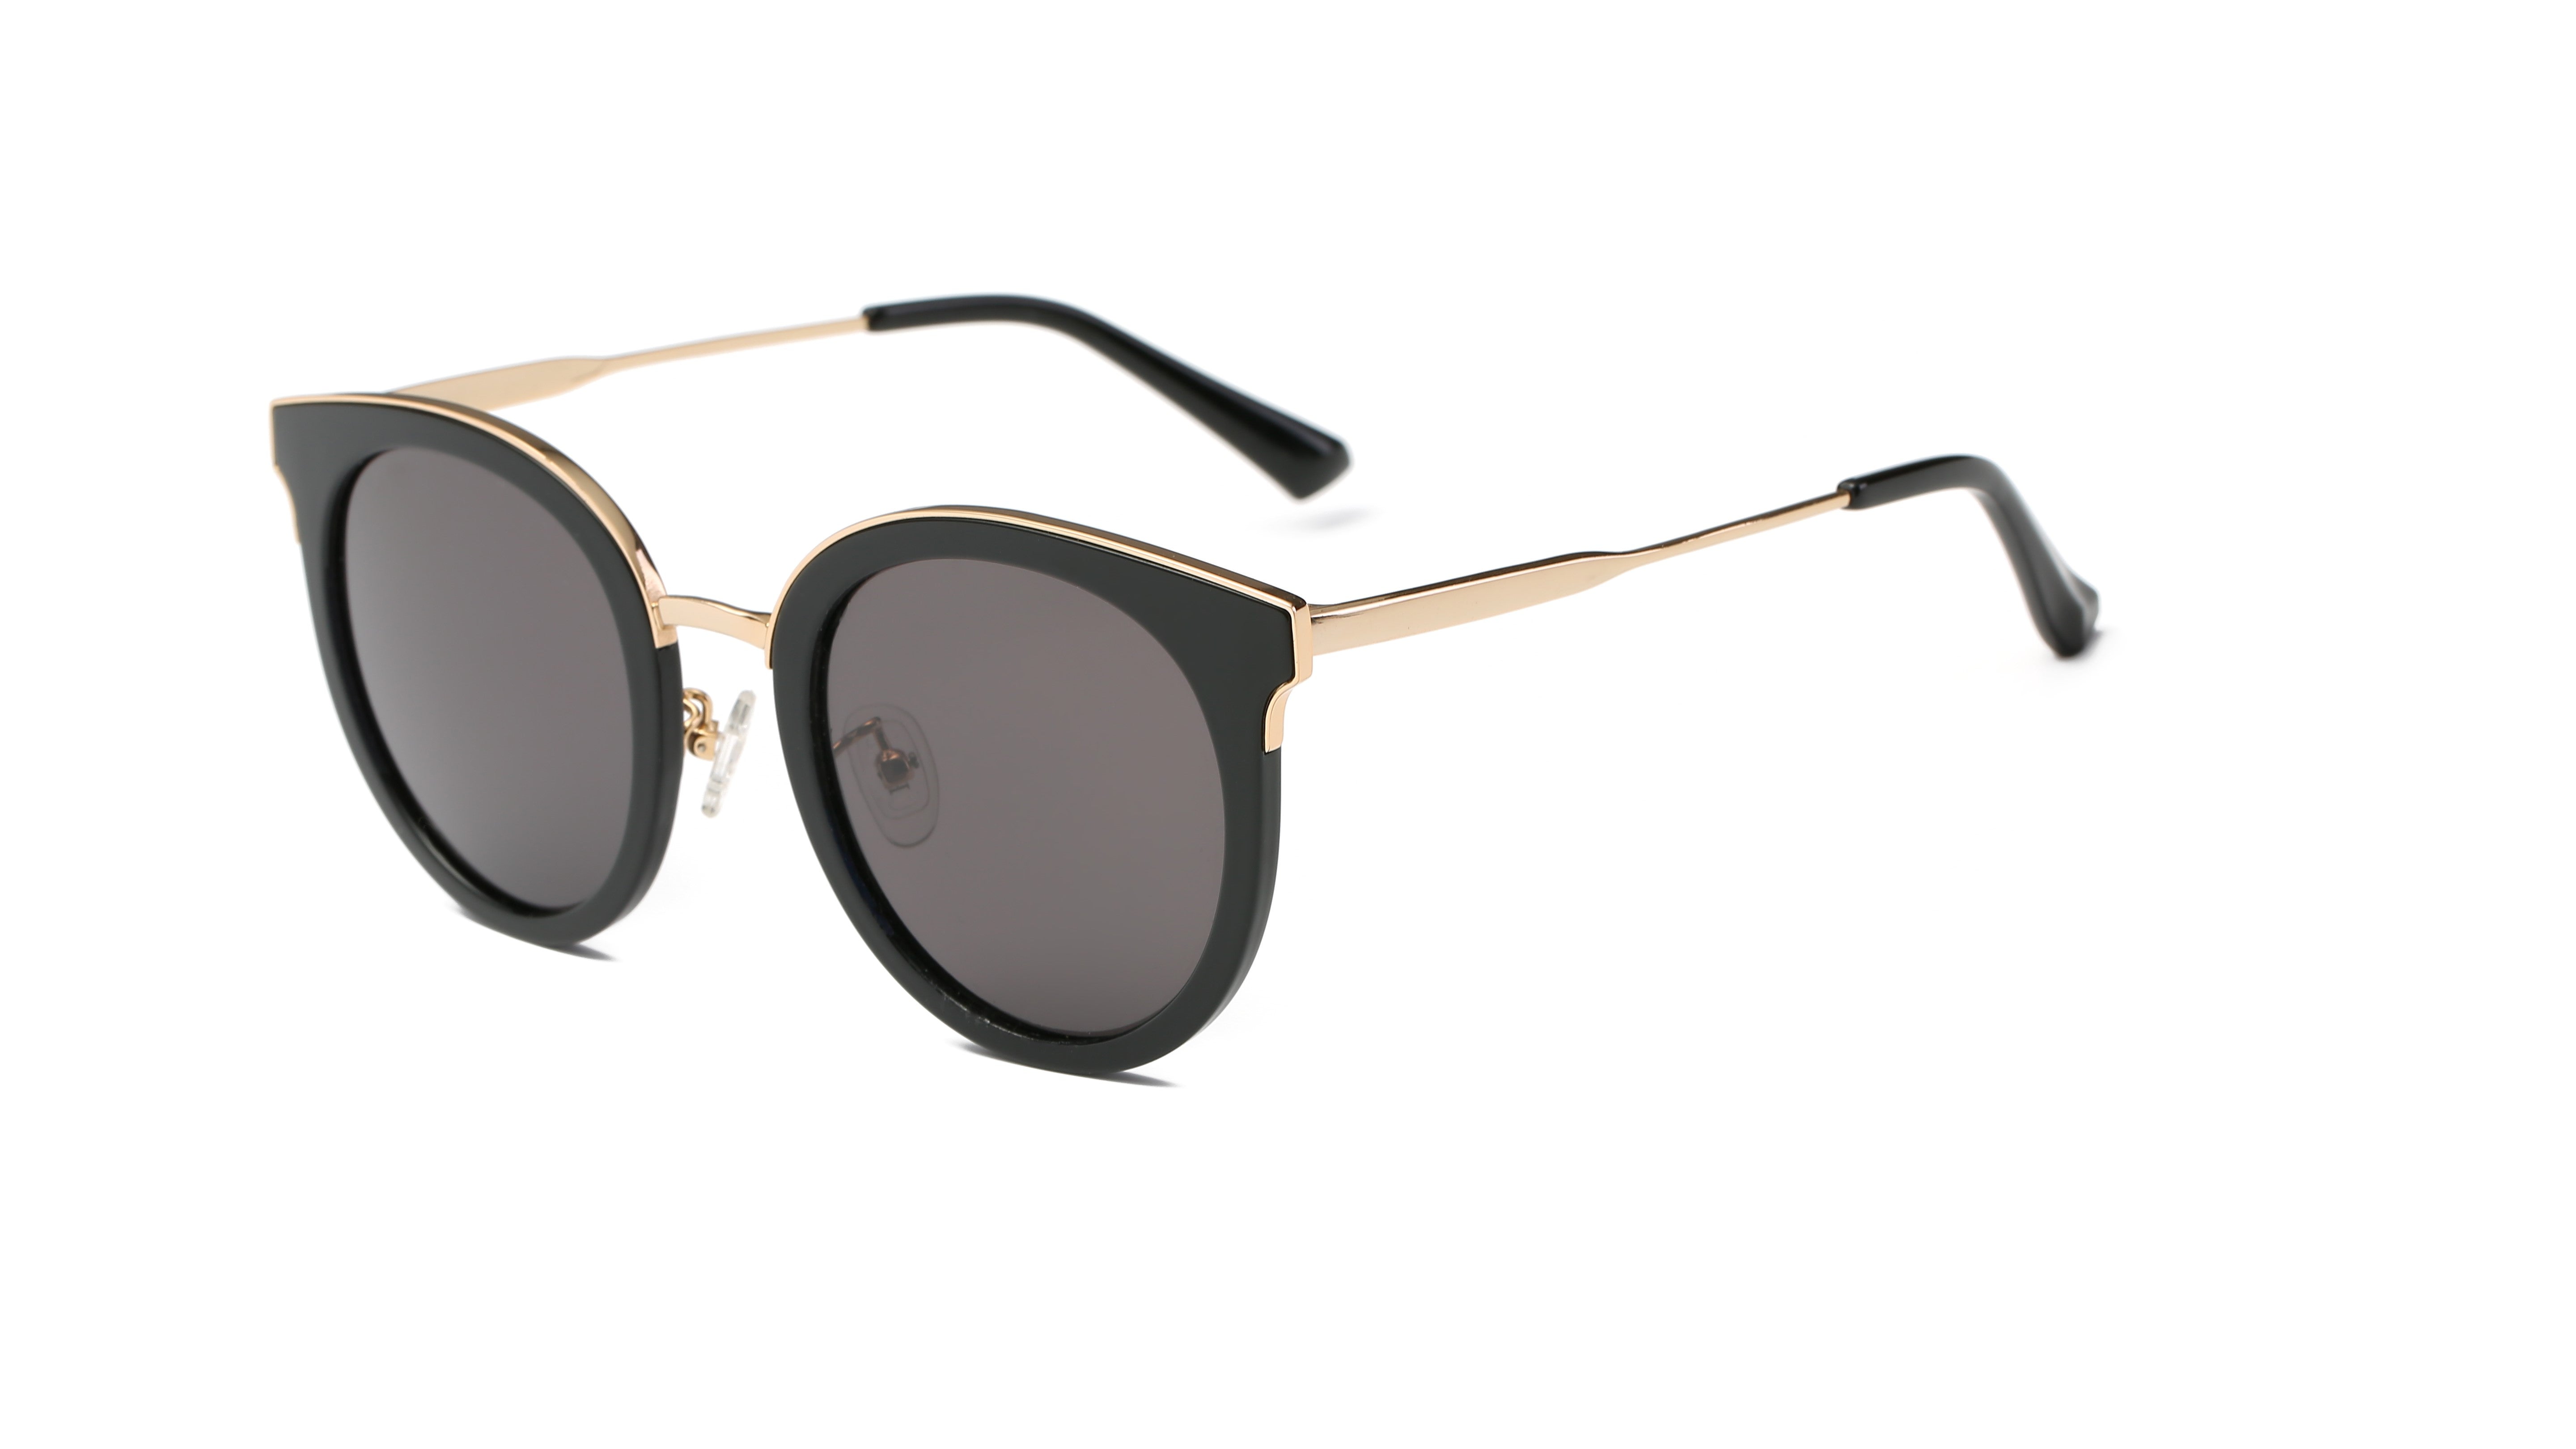 PRSR-T60094 - Women Round Cat Eye Tinted Polarized Sunglasses Black